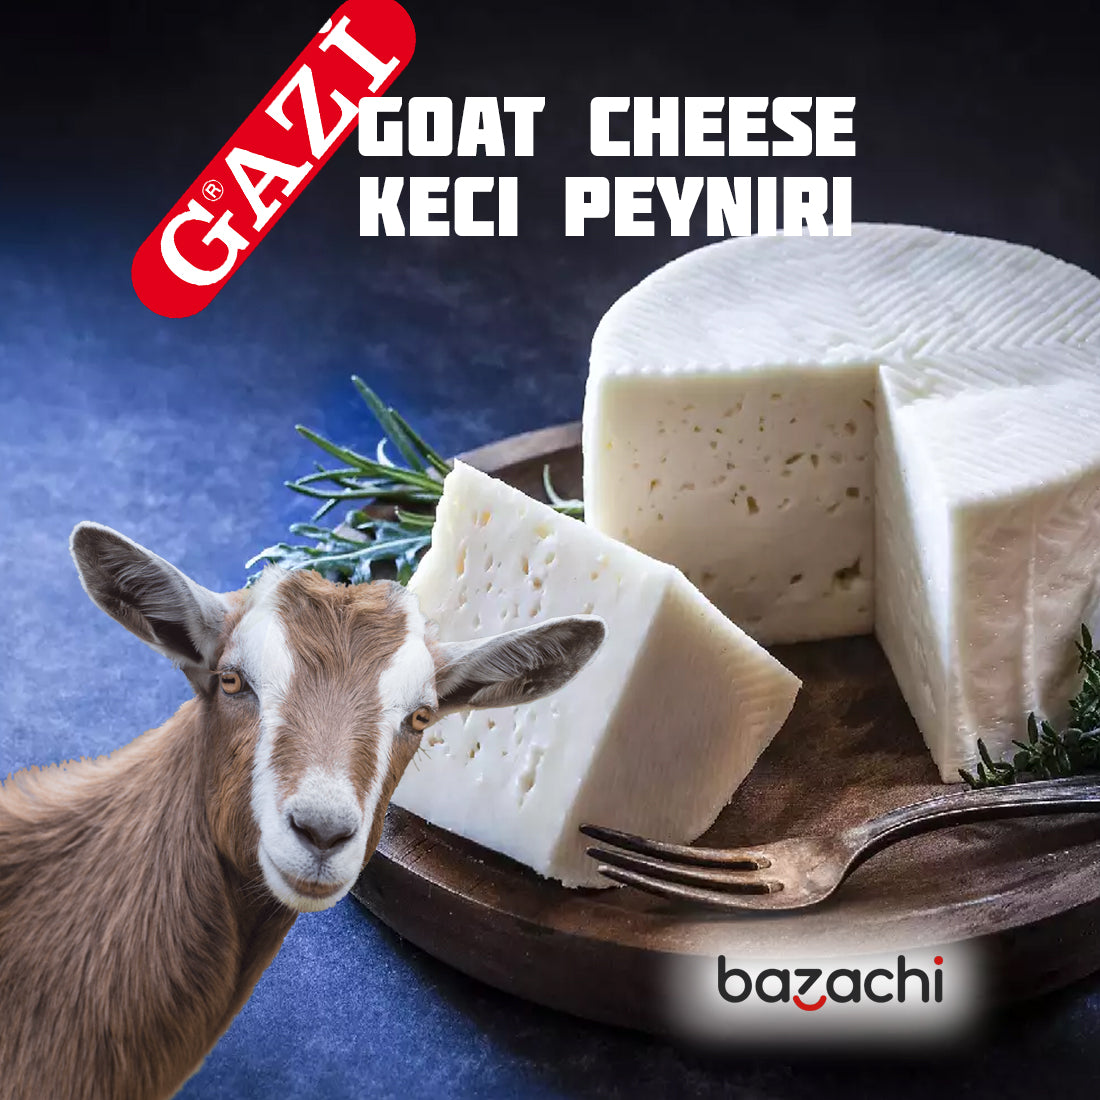 Gazi Goat Milk Cheese 50% 750g